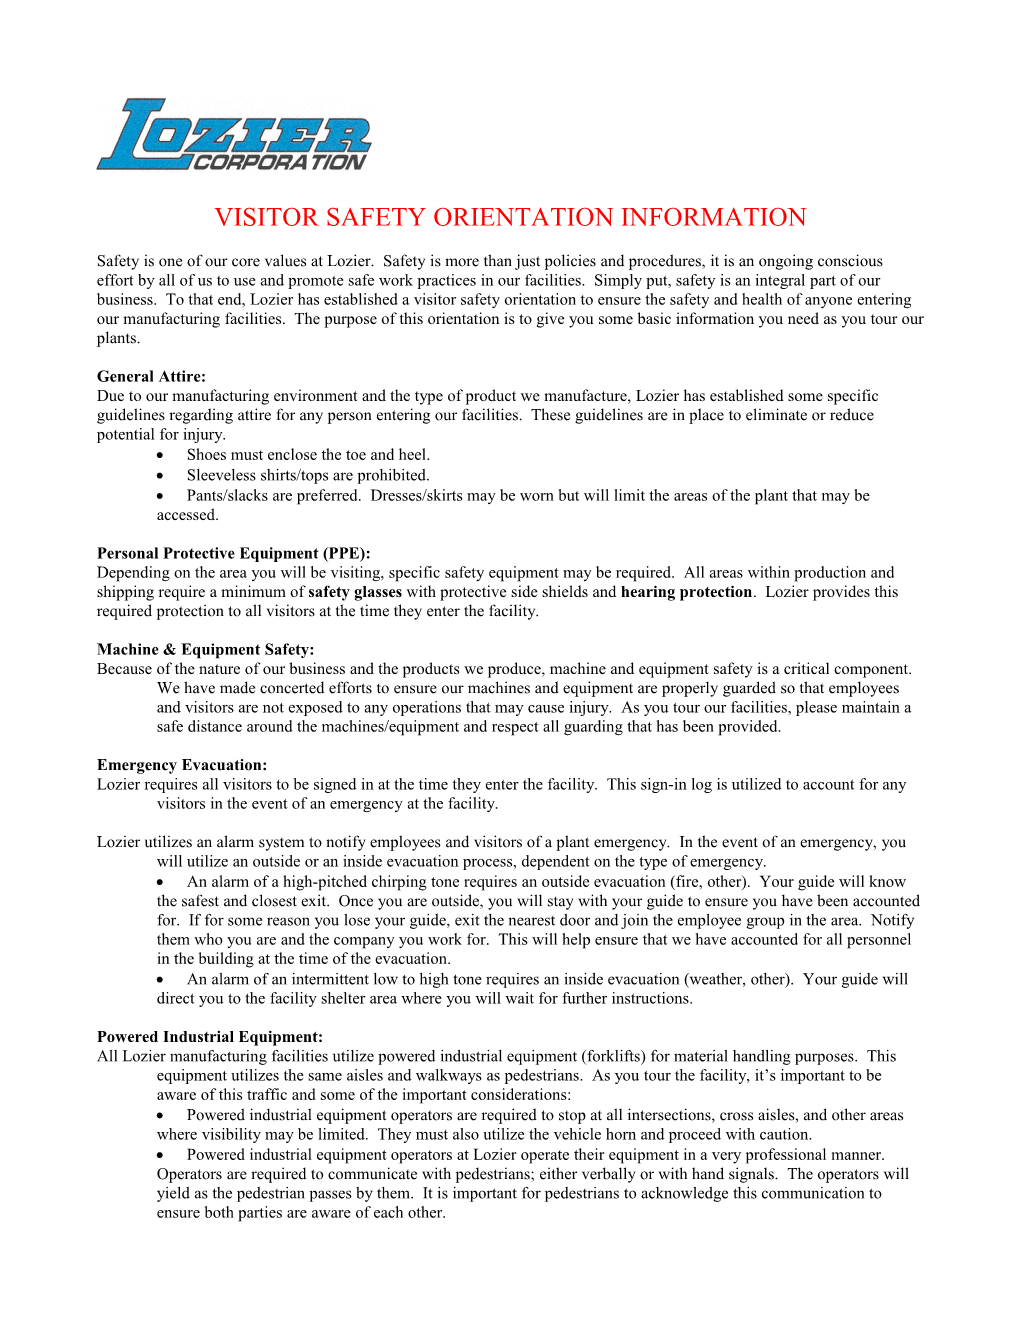 Visitor Safety Orientation Information